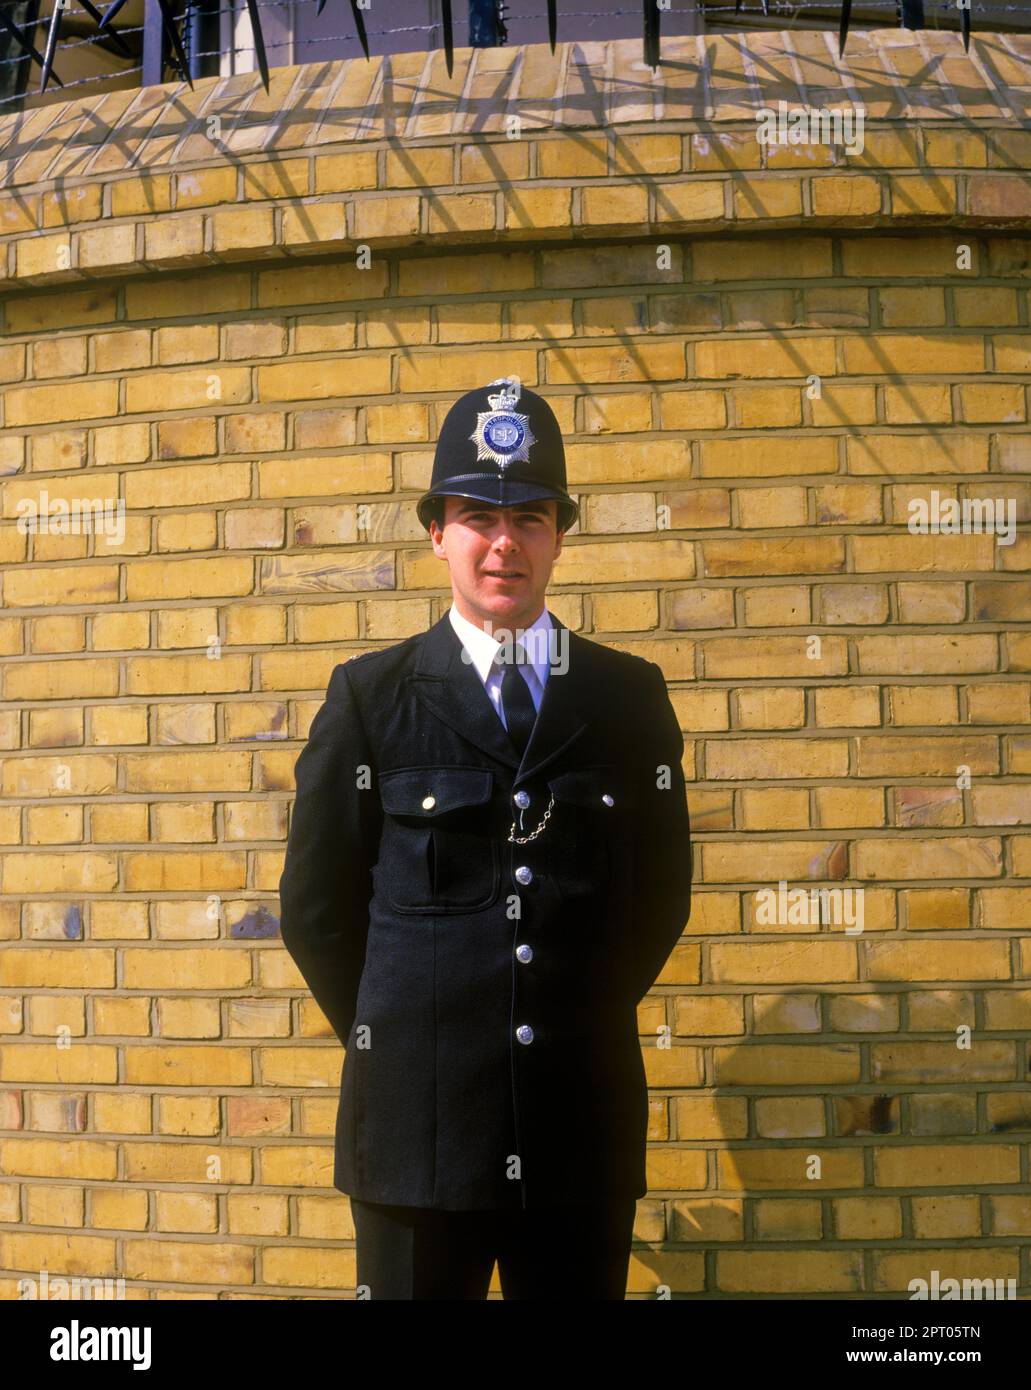 1987 HISTORICAL PORTRAIT OF METROPOLITAN POLICEMAN LONDON ENGLAND UK Stock Photo